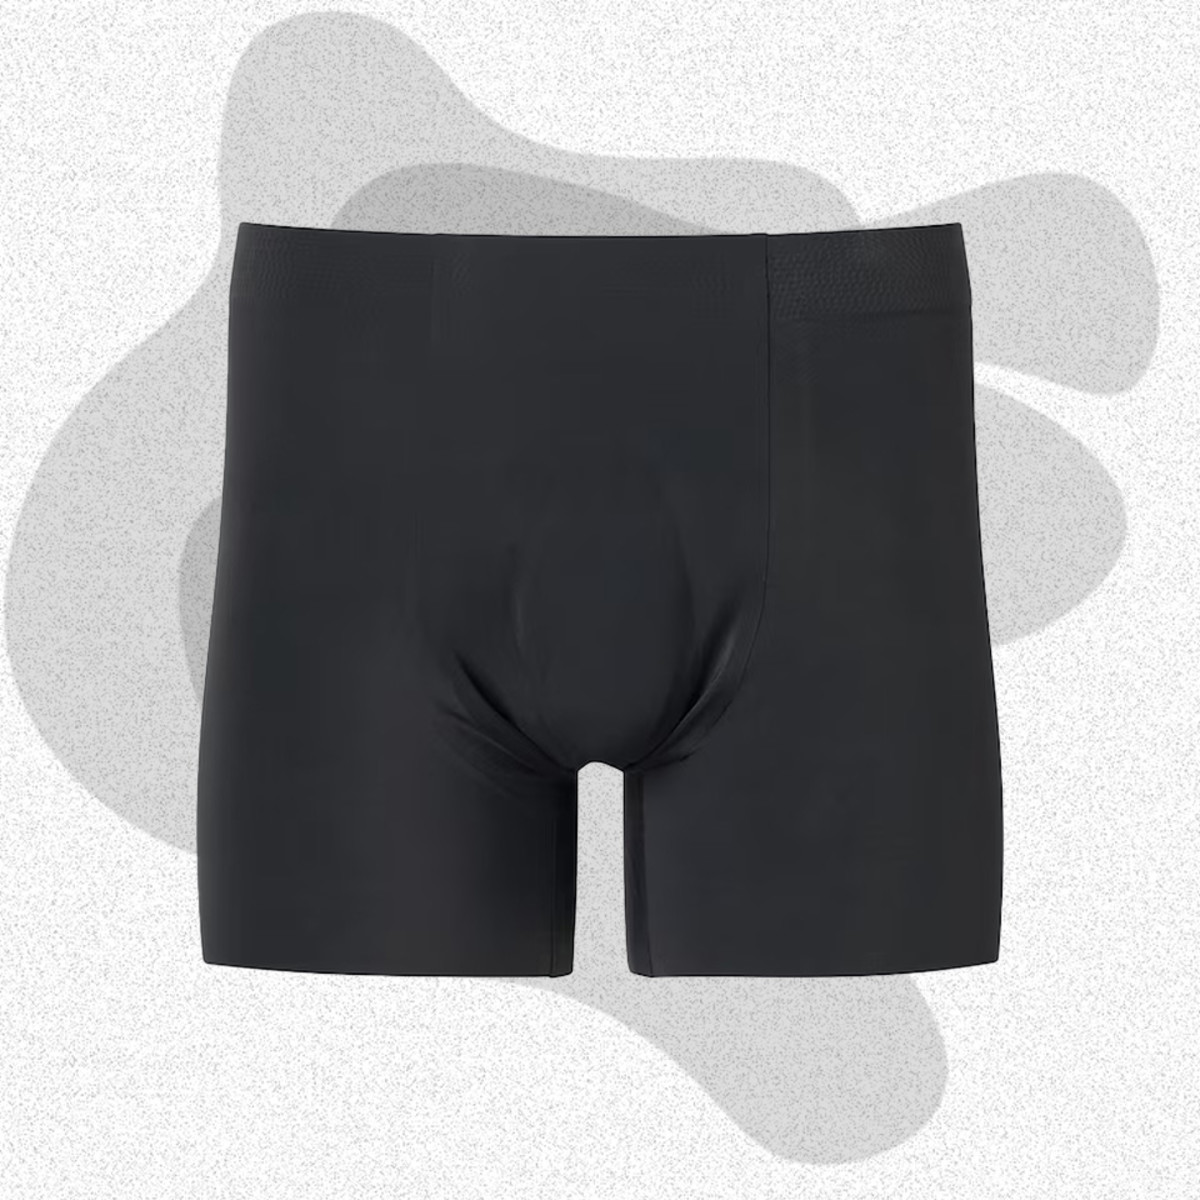 The Right Men's Sports Underwear